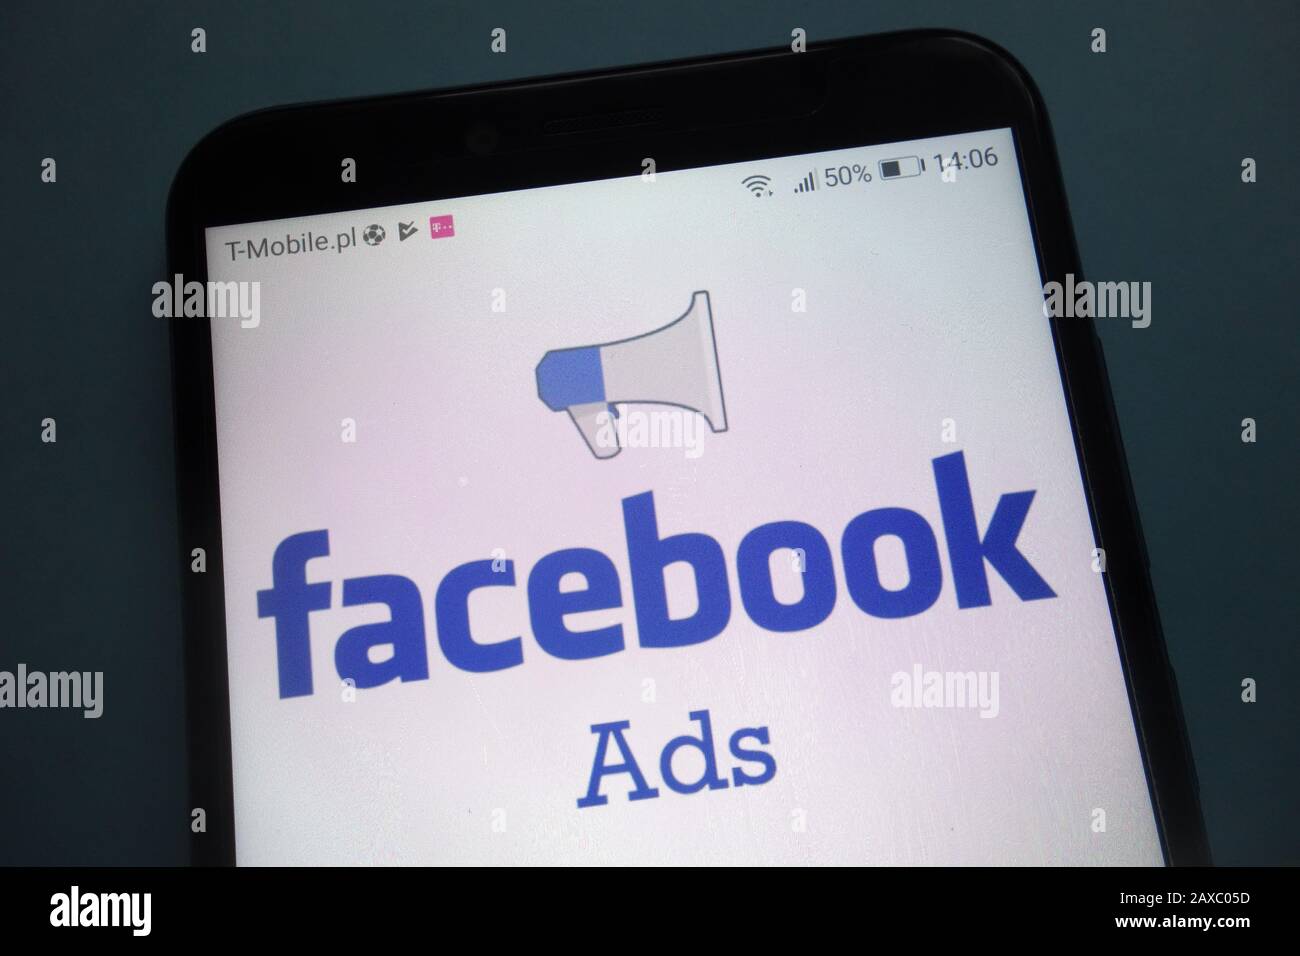 Facebook Ads logo on smartphone Stock Photo